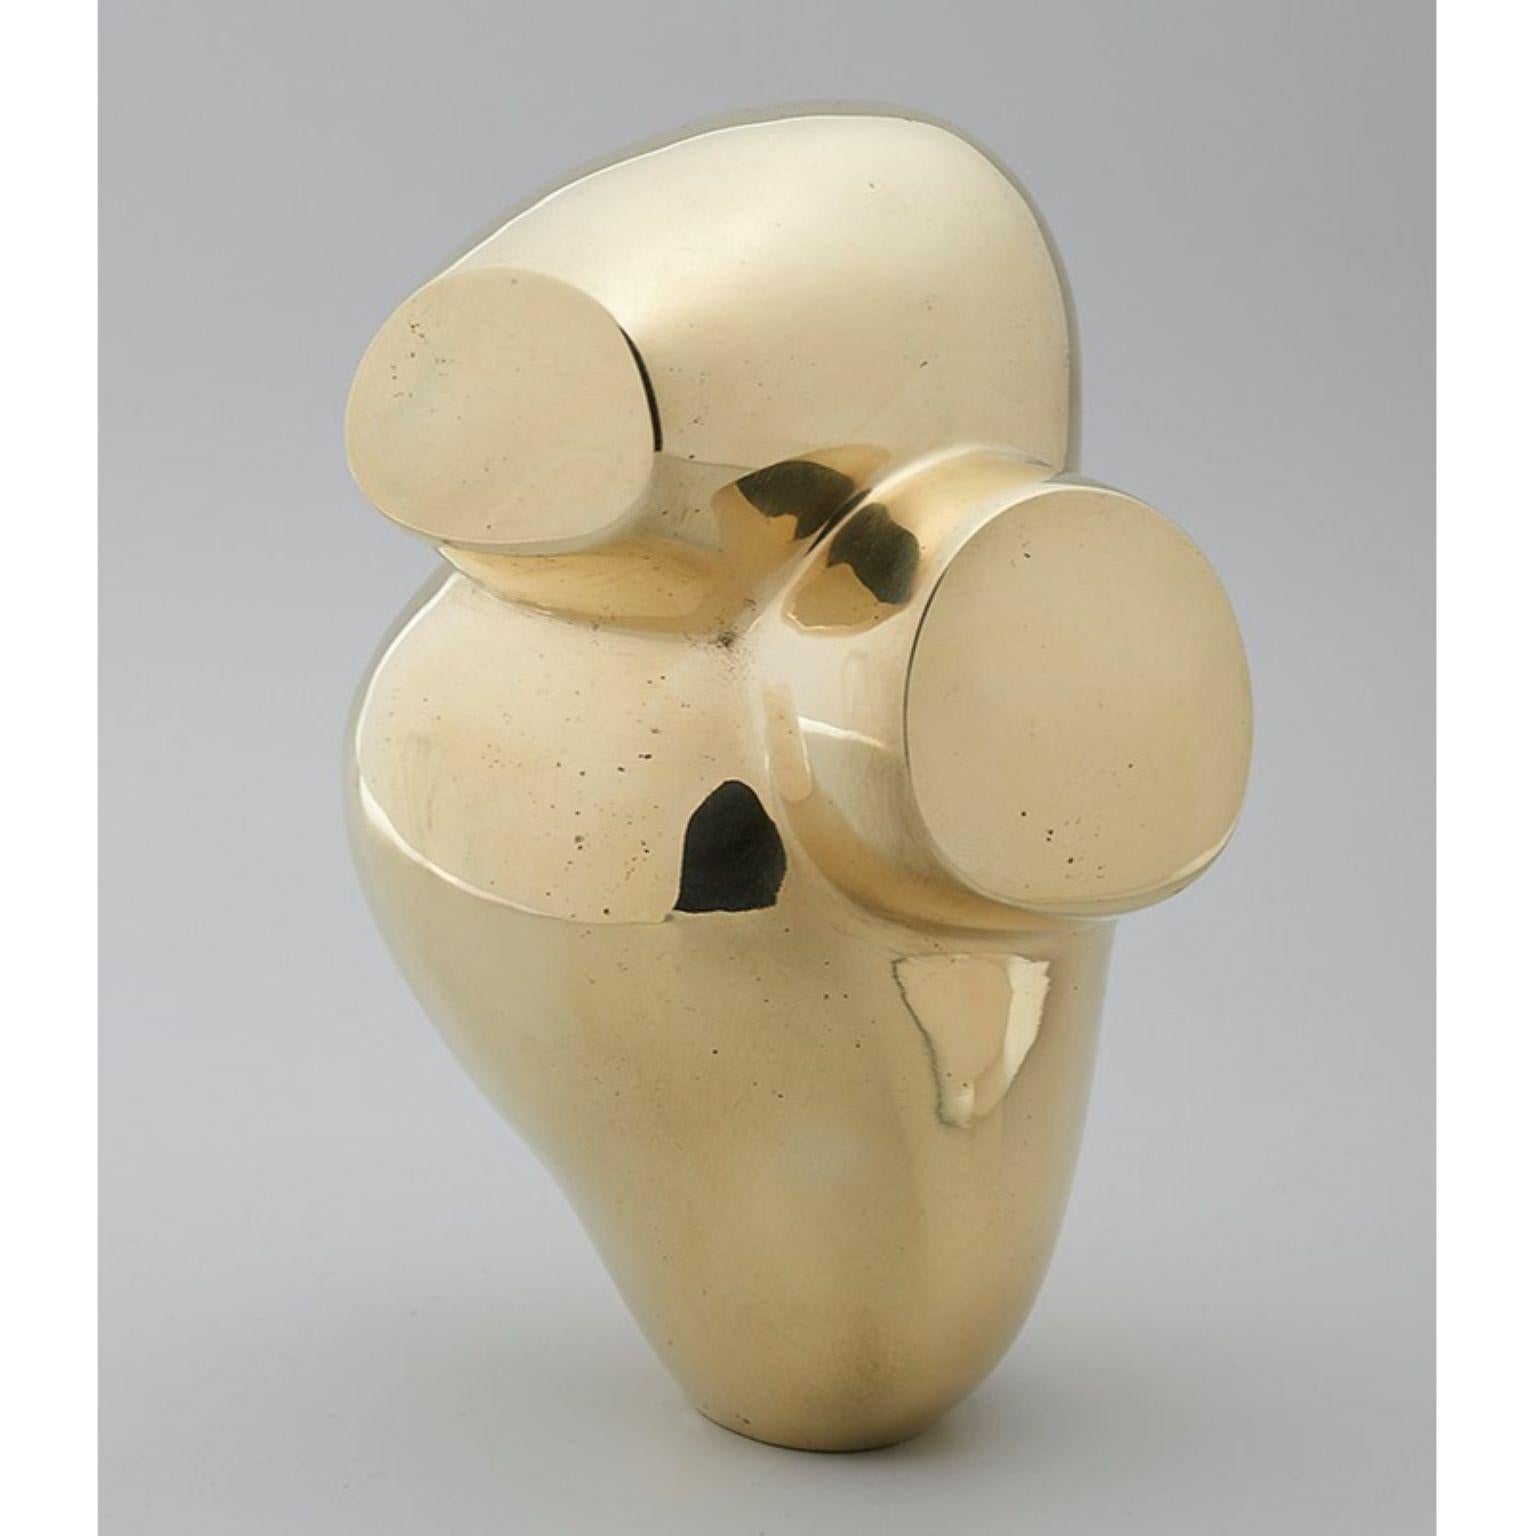 Yann Barrere - Idole Bronze - Original Sculpture
Dimensions: 20 x 15 x 12 cm
Materials: Bronze

